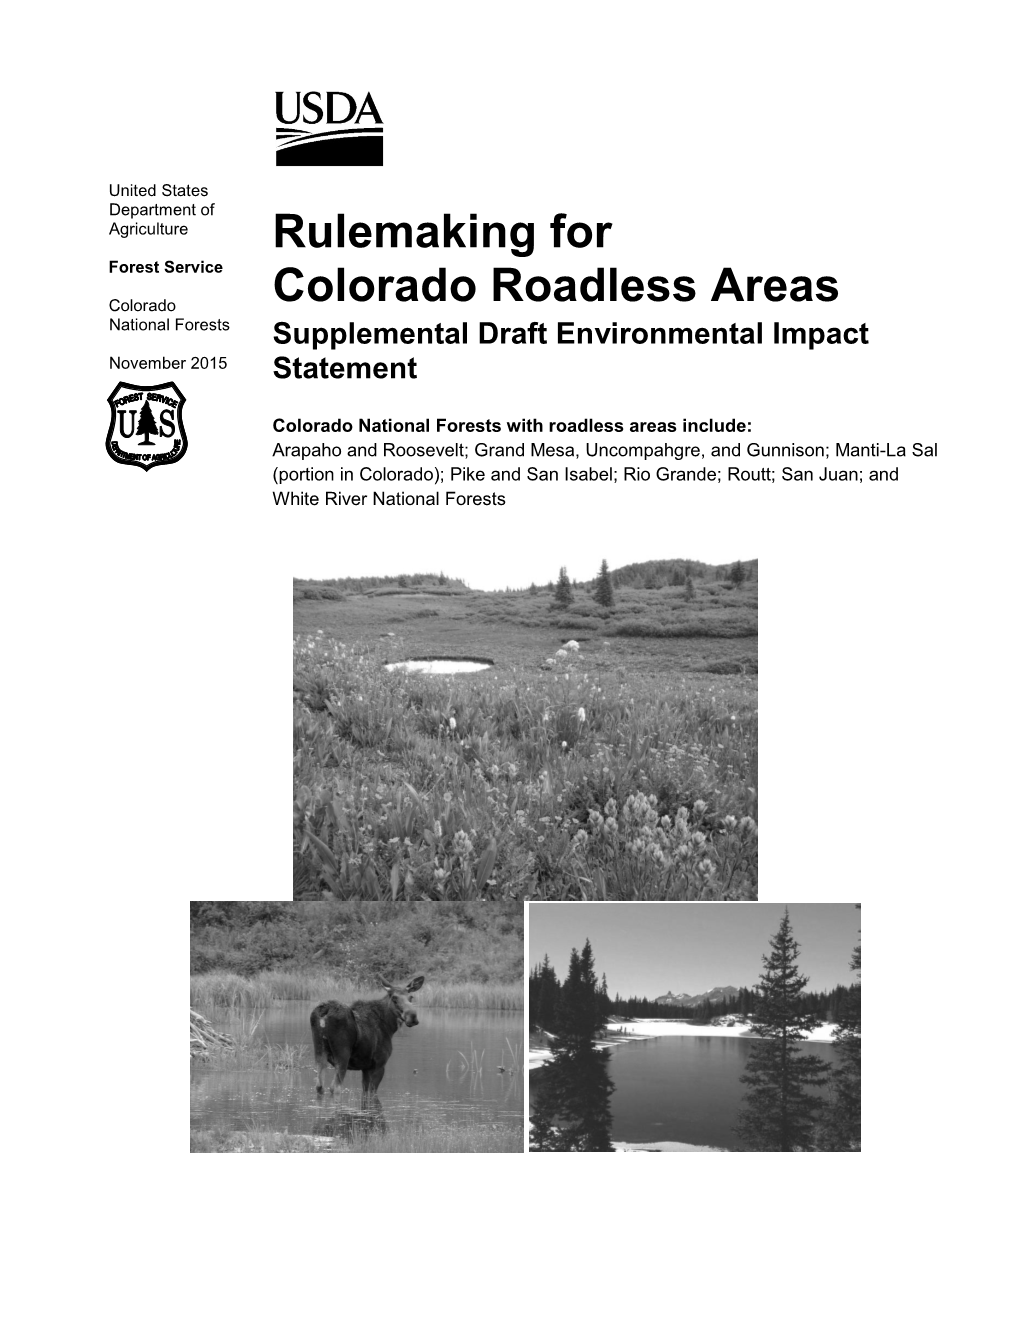 Rulemaking for Colorado Roadless Areas Draft Environmental Impact